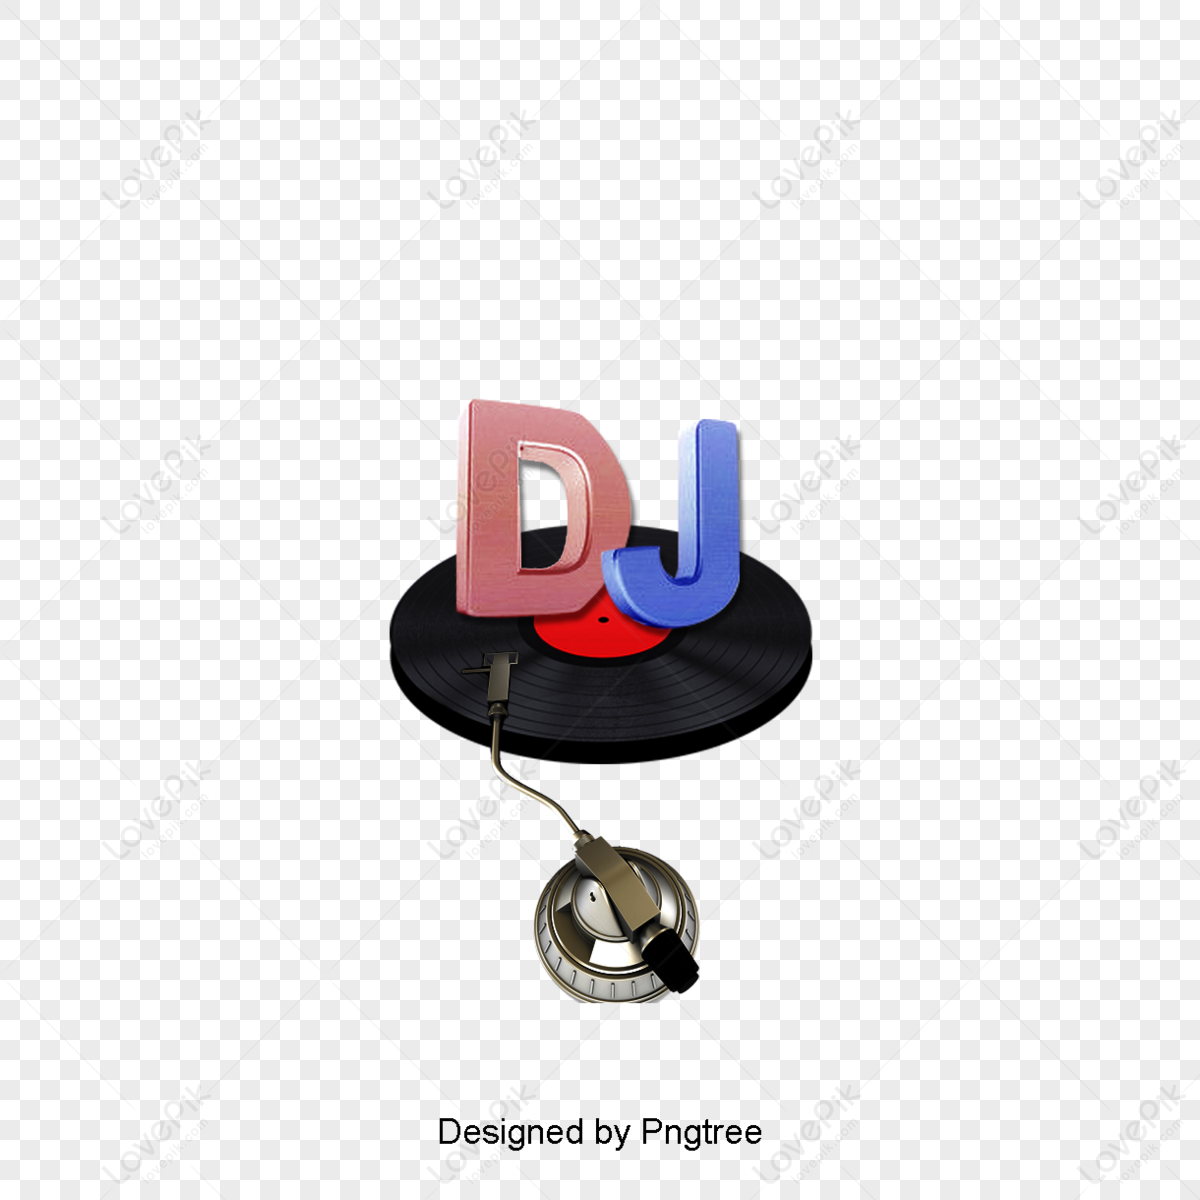 Logos De Djs Png, Transparent Png , Transparent Png Image - PNGitem